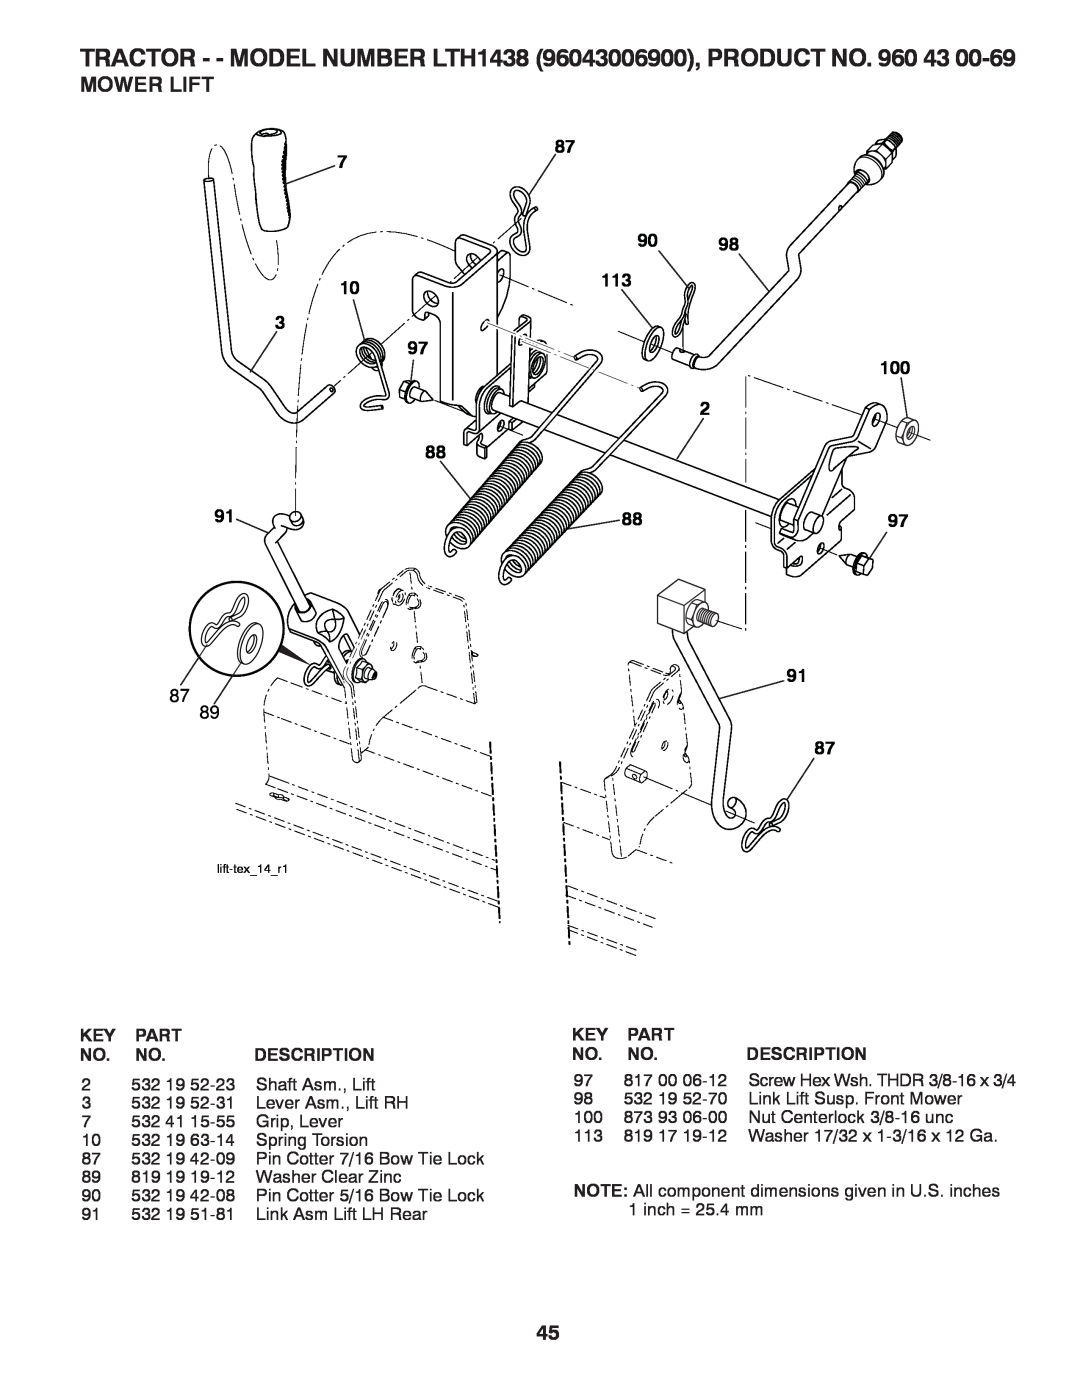 Husqvarna LTH1438 owner manual Mower Lift, Part, Description 